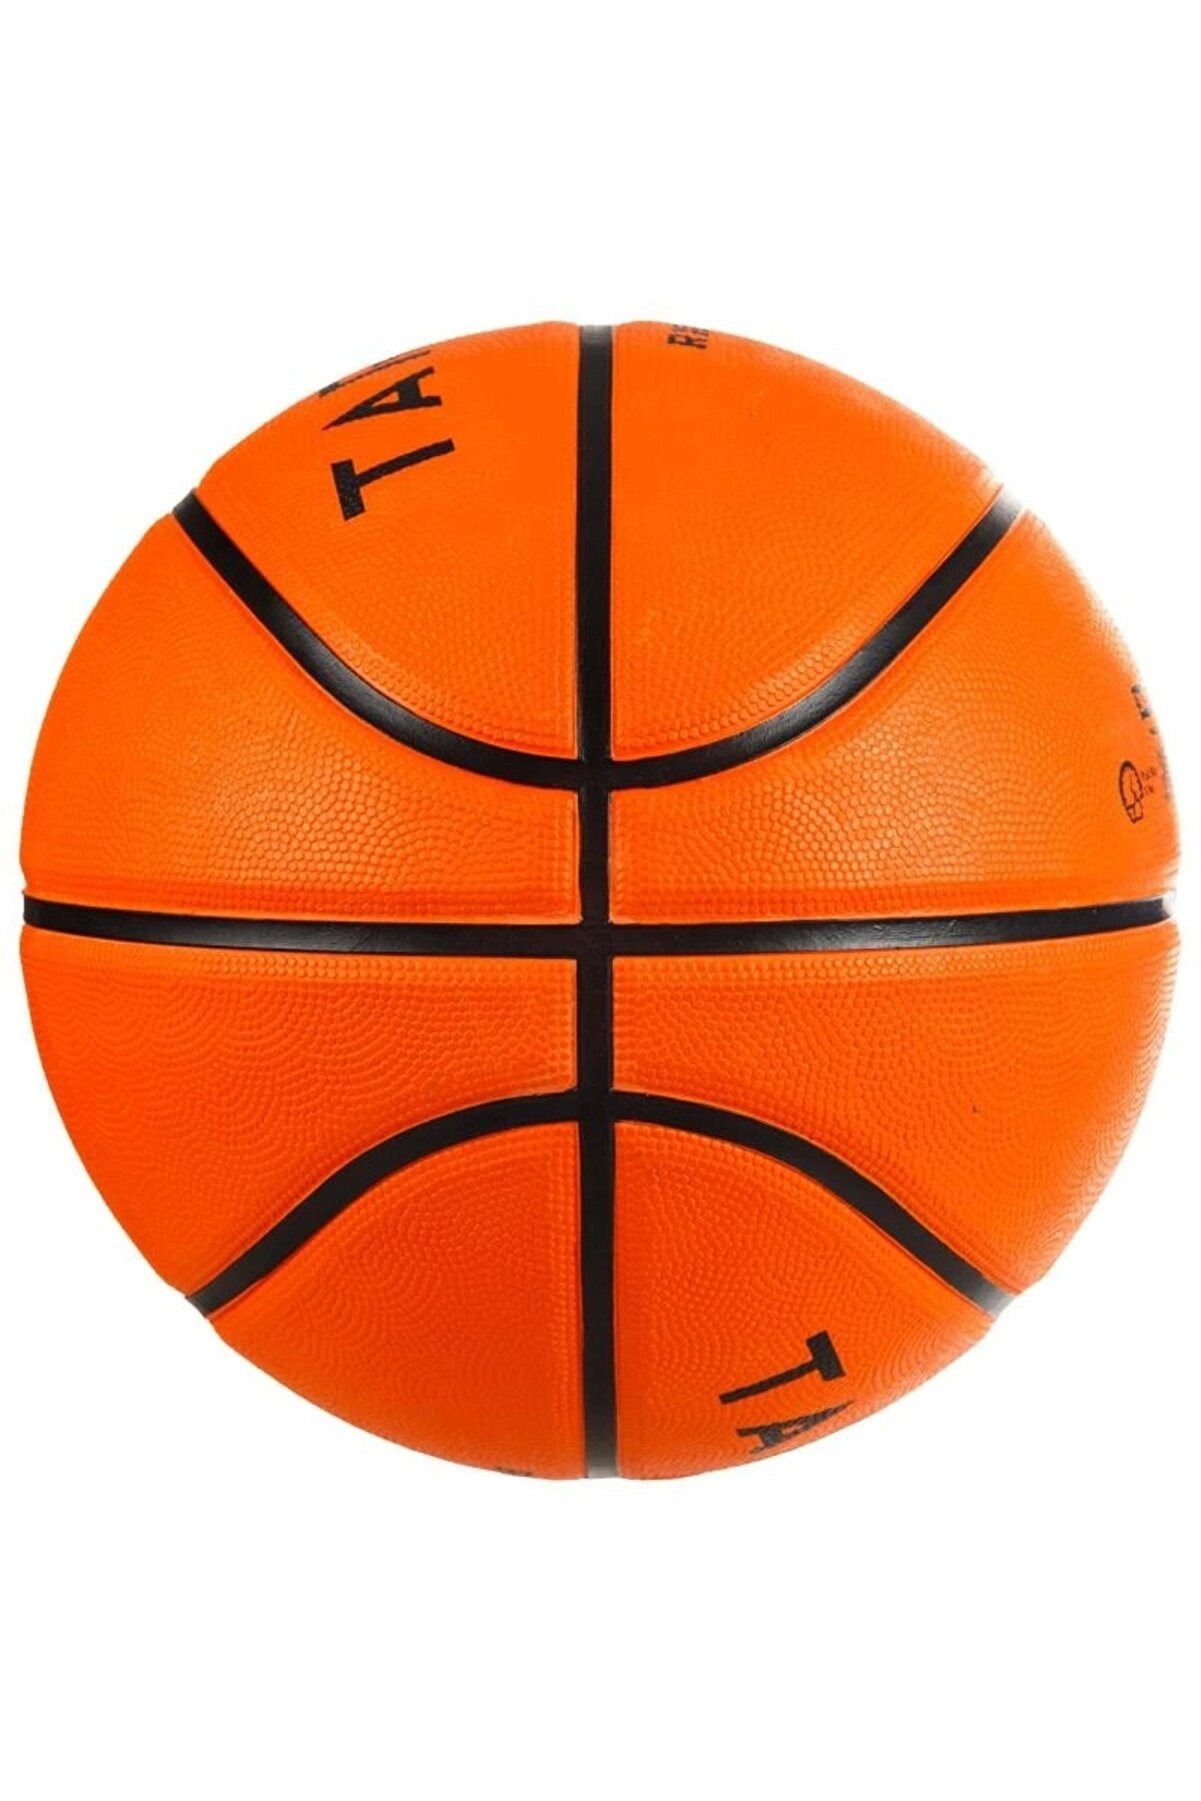 Genel Markalar Basketbol Topu - 7 Numara - Turuncu - R100 Tarmak